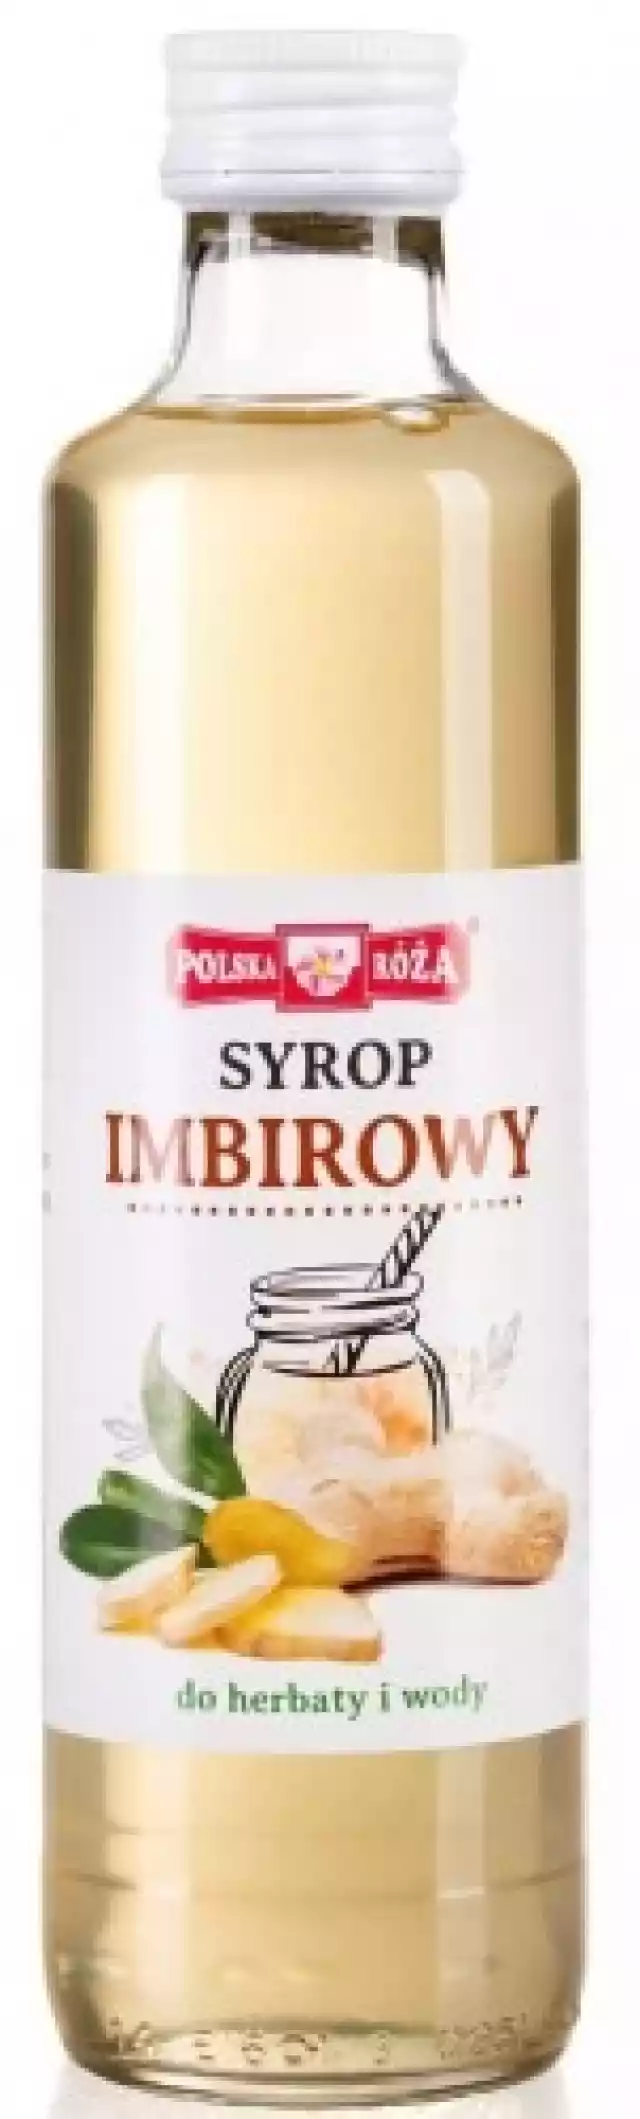 Syrop Imbirowy 315 G Polska Róża